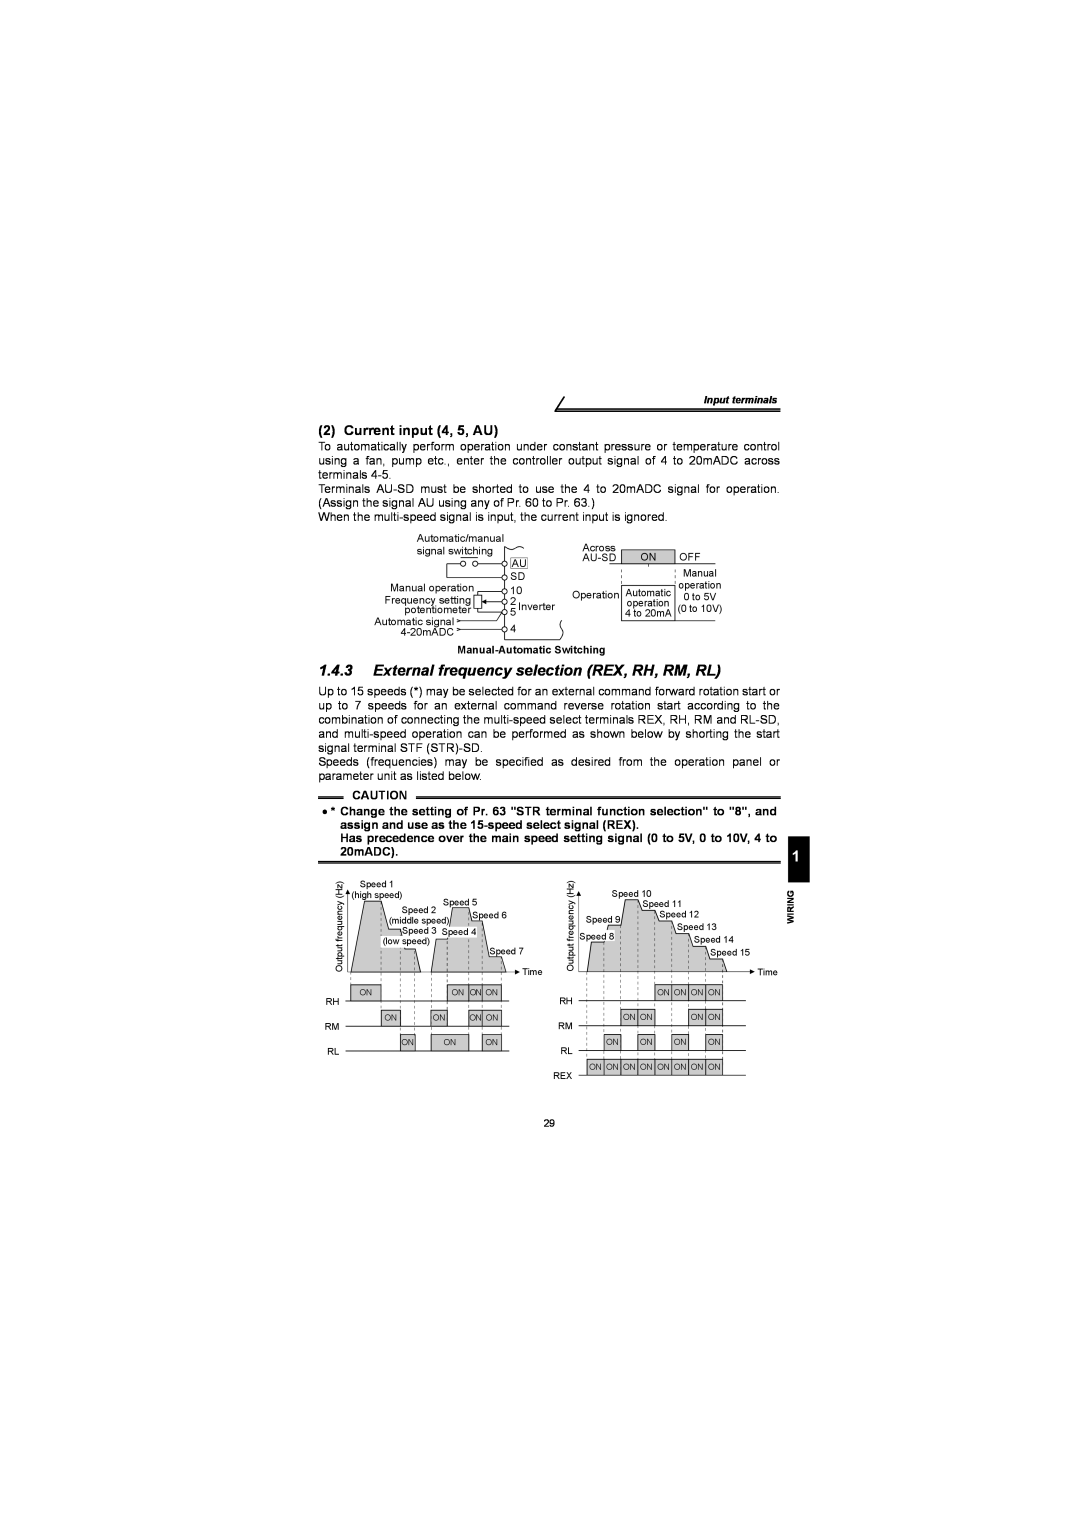 Mitsubishi Electronics FR-S500 instruction manual External frequency selection REX, RH, RM, RL, Current input 4, 5, AU 